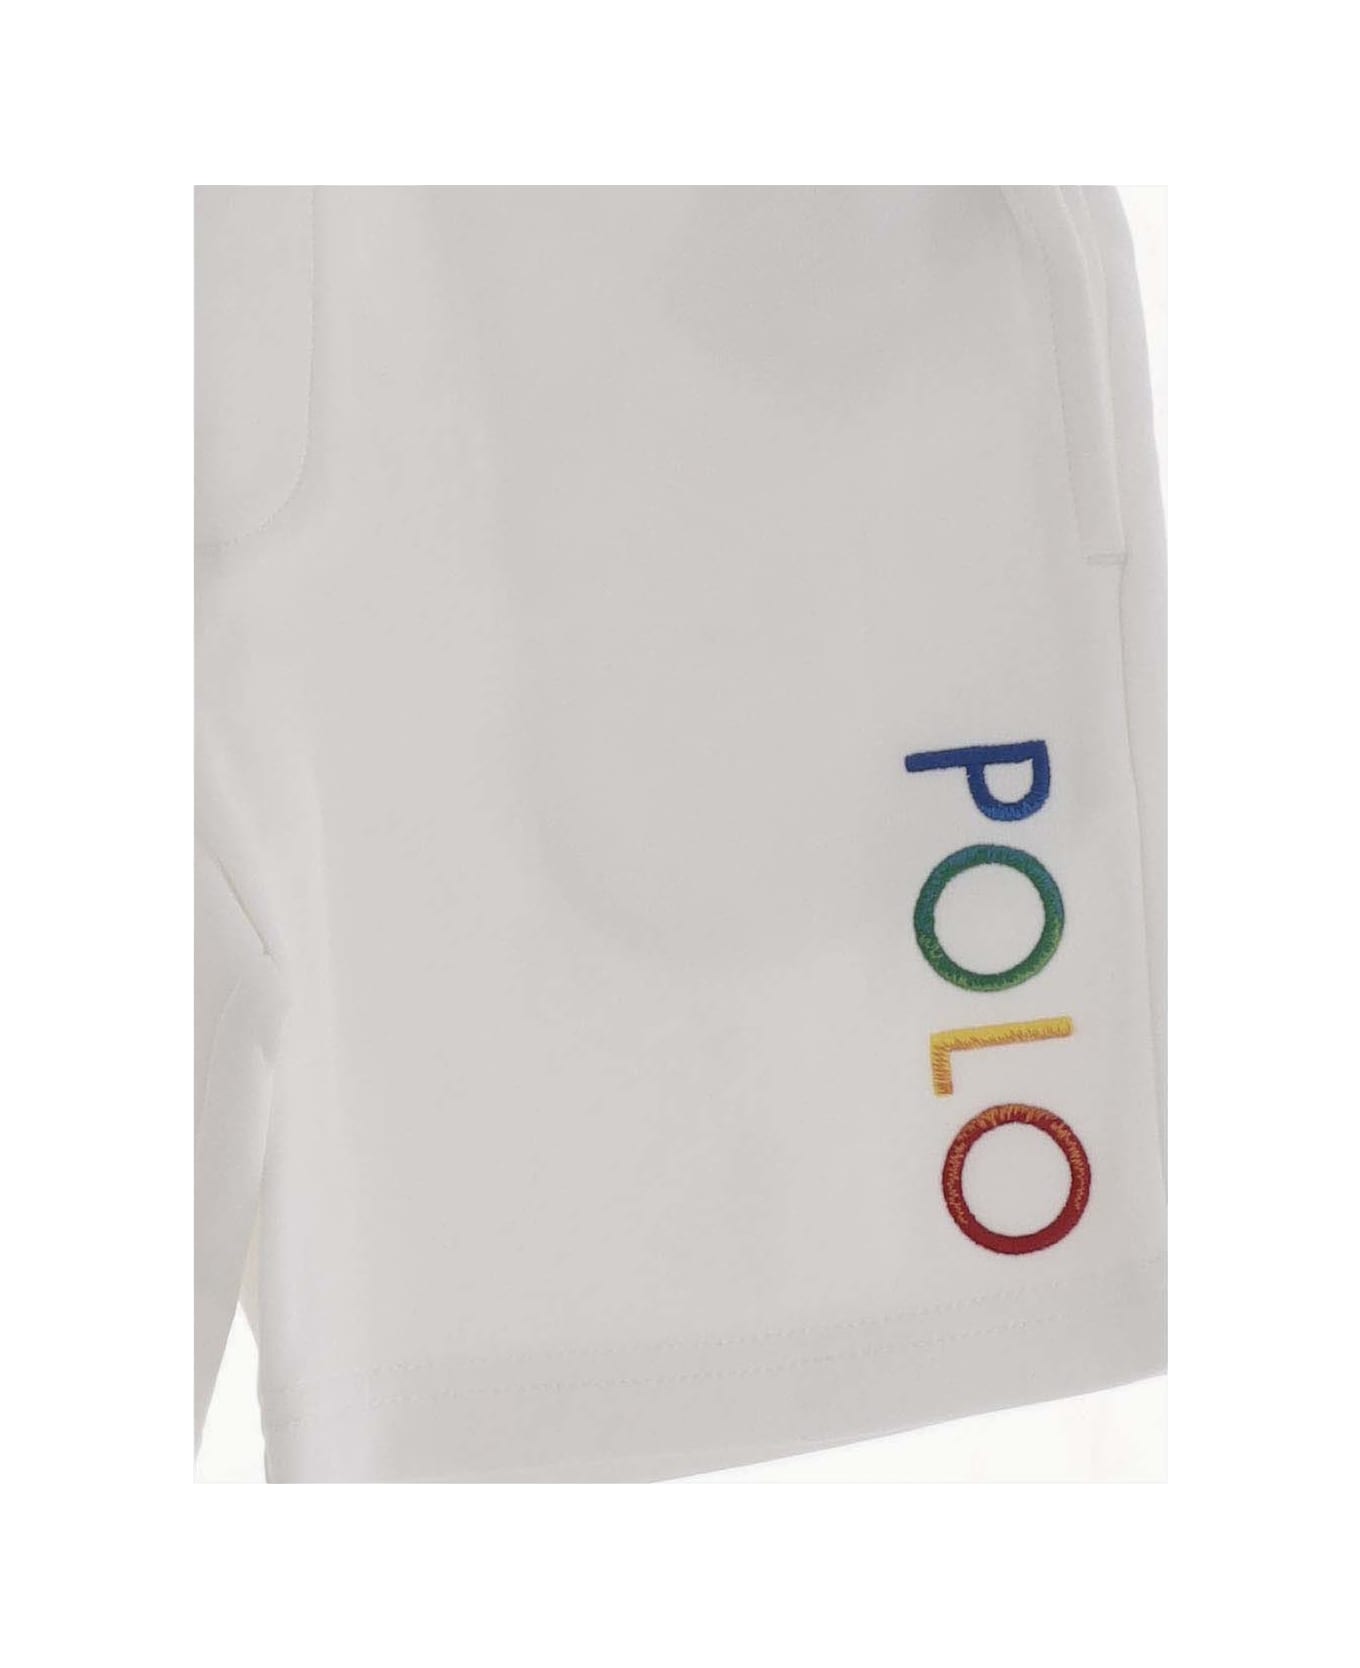 Polo Ralph Lauren Cotton Blend Logo Short Pants - White ボトムス